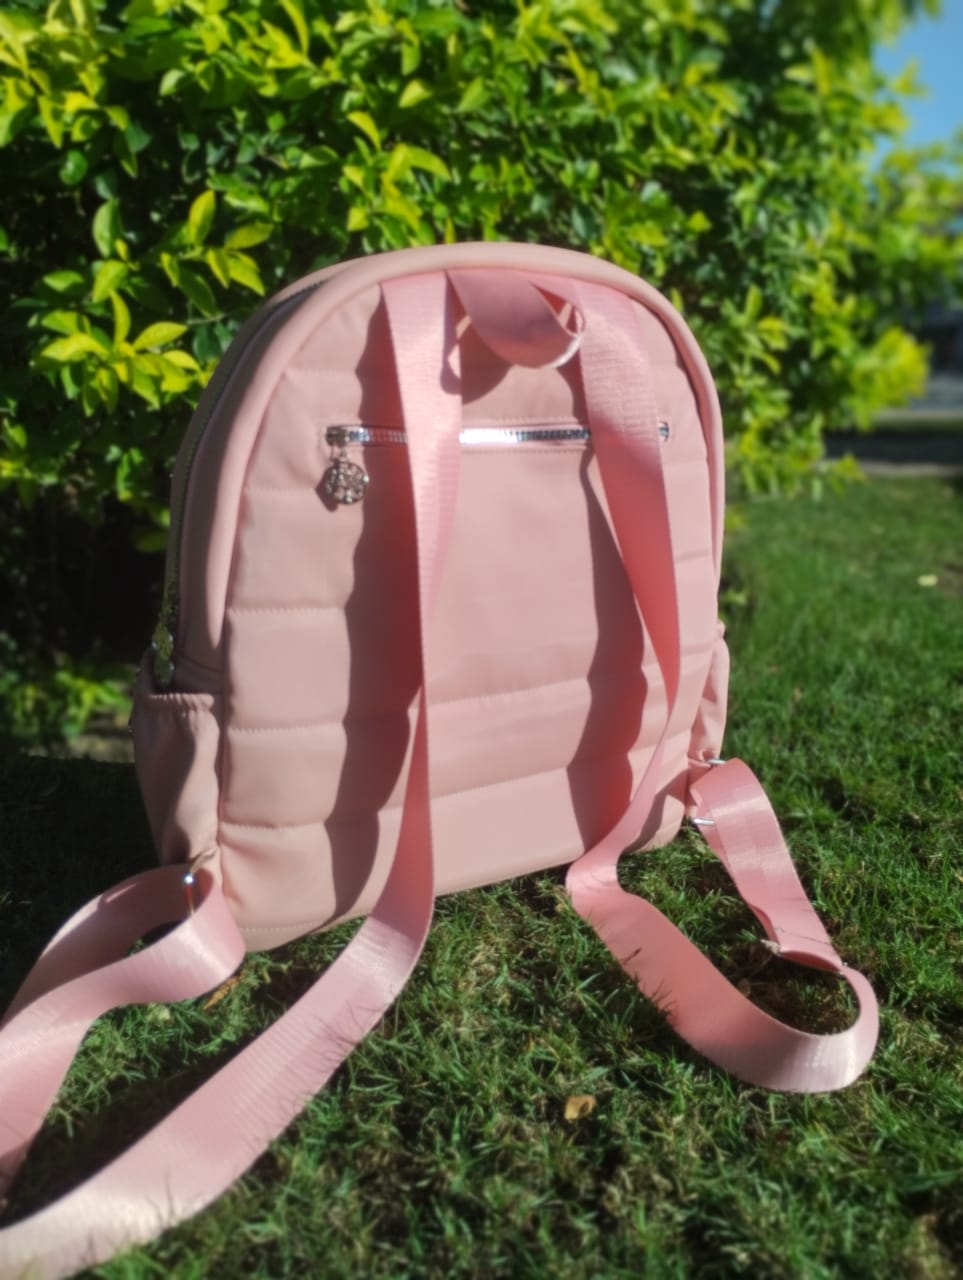 Cute Pink Handmade Backpack